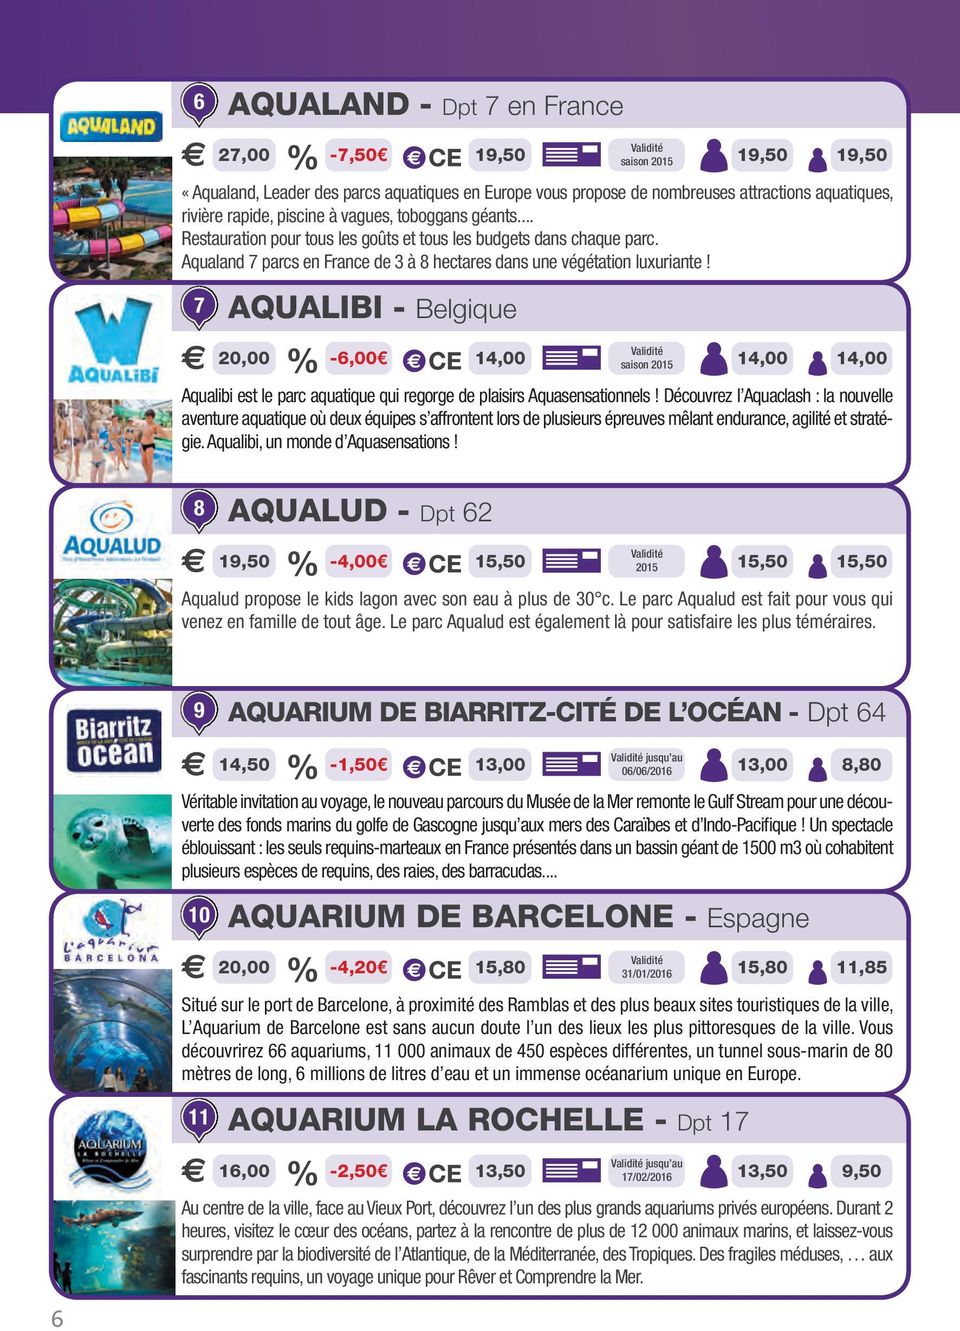 7 AQUALIBI - Belgique 20,00-6,00 14,00 saison 2015 14,00 14,00 Aqualibi est le parc aquatique qui regorge de plaisirs Aquasensationnels!